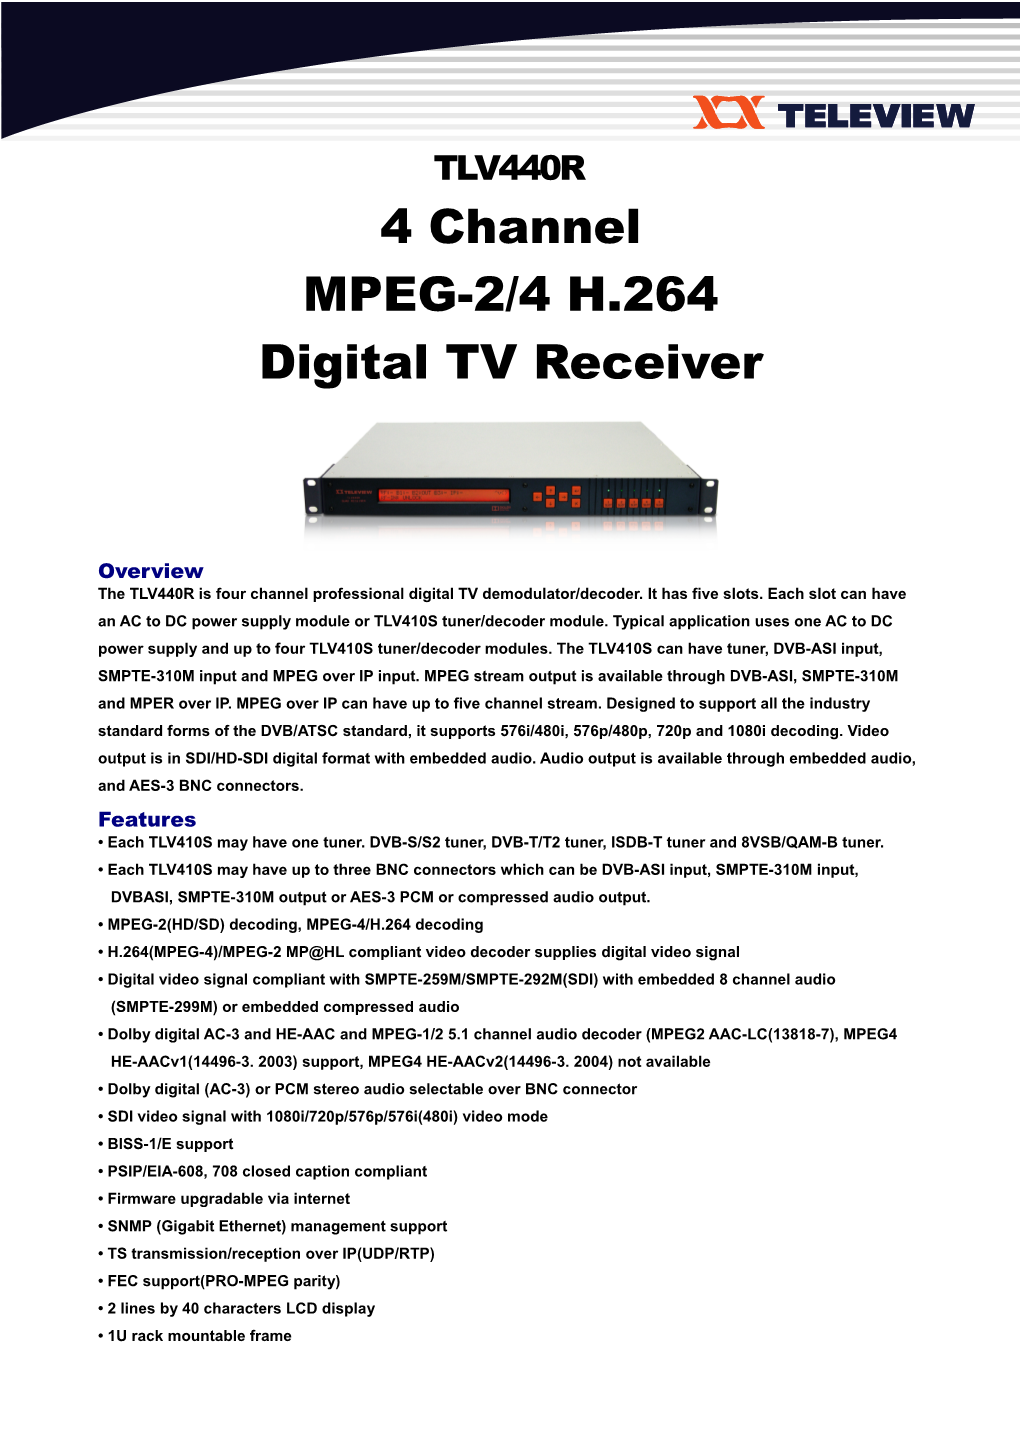 4 Channel MPEG-2/4 H.264 Digital TV Receiver